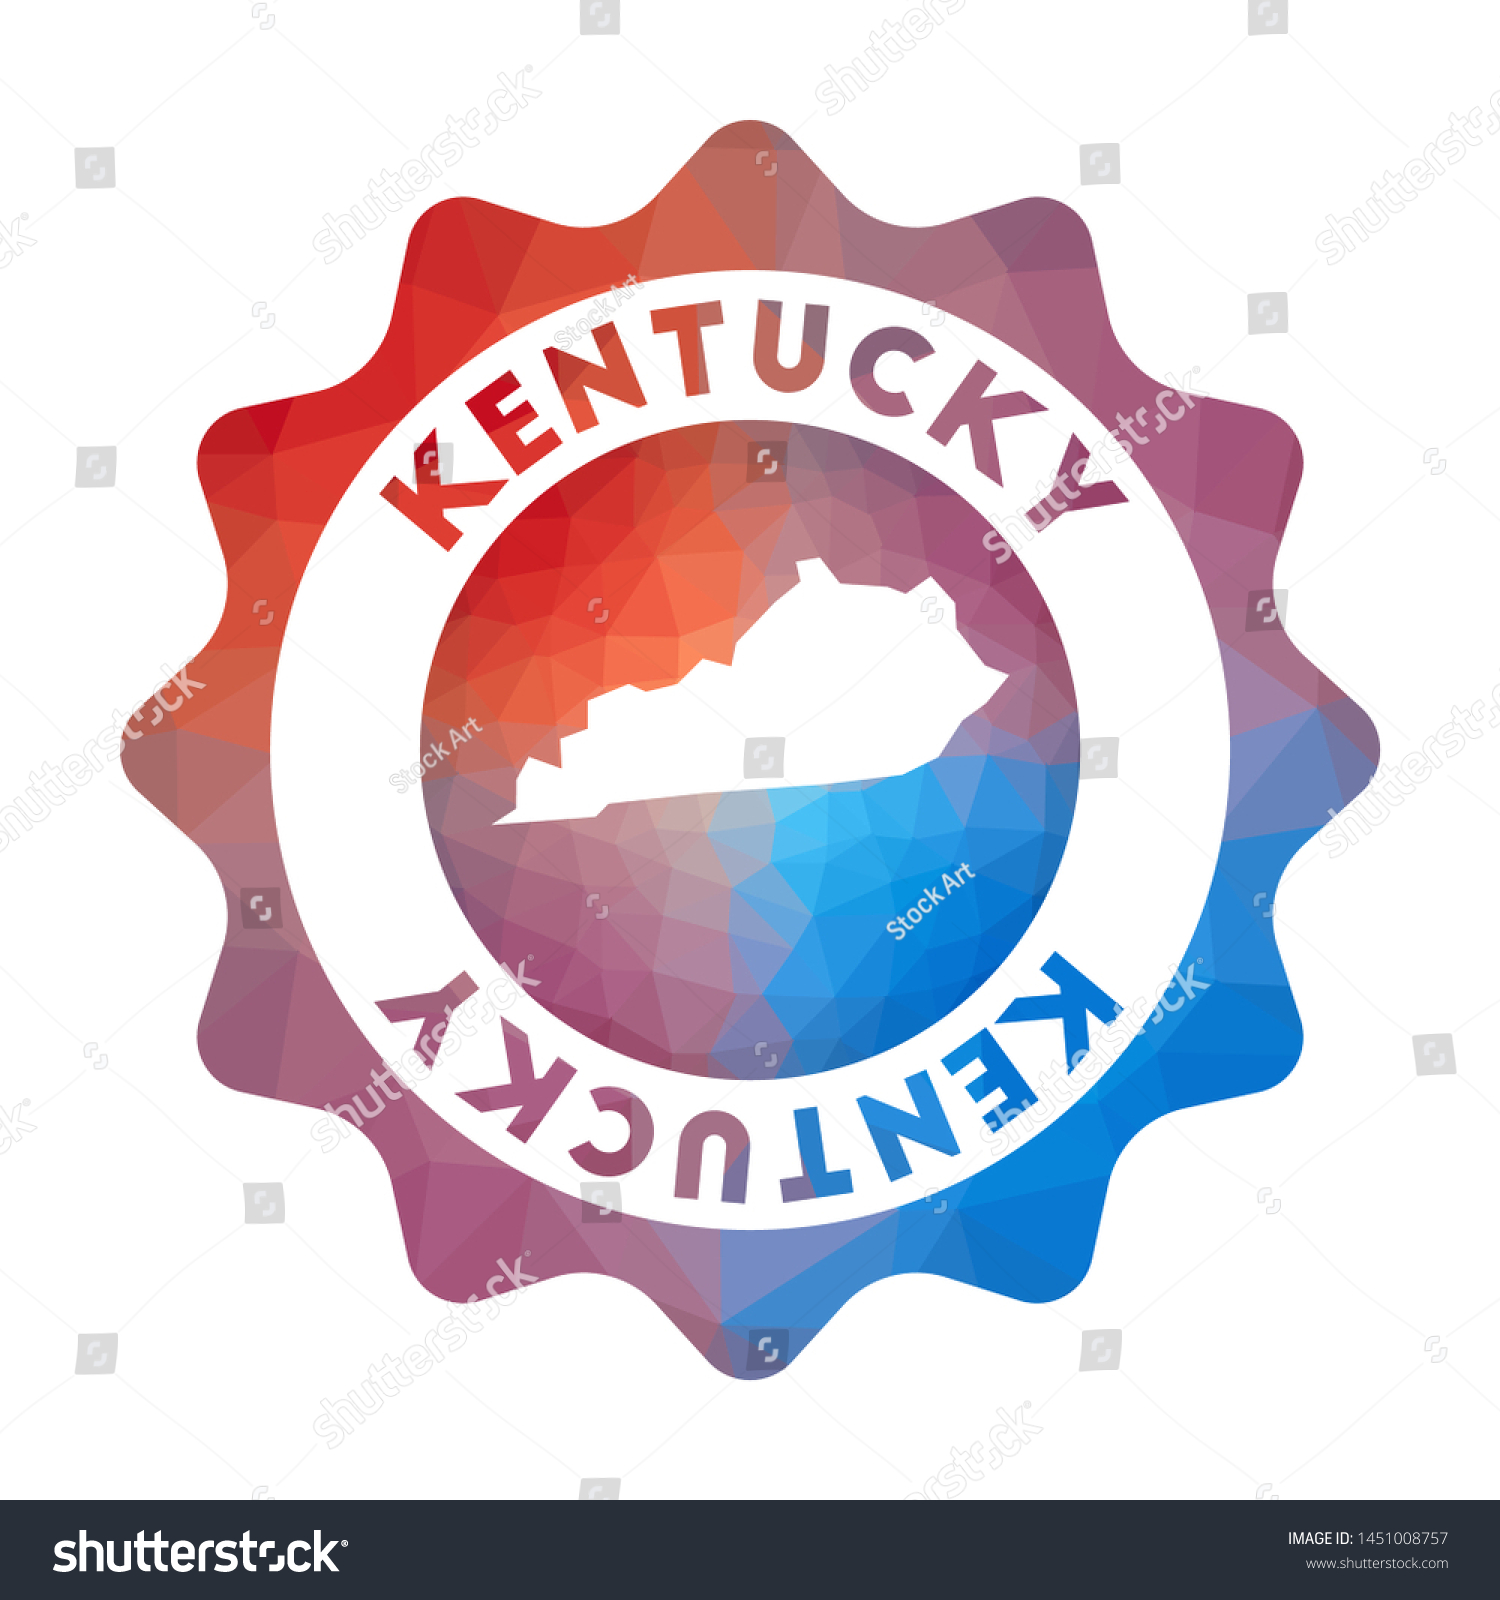 kentucky tourism logo